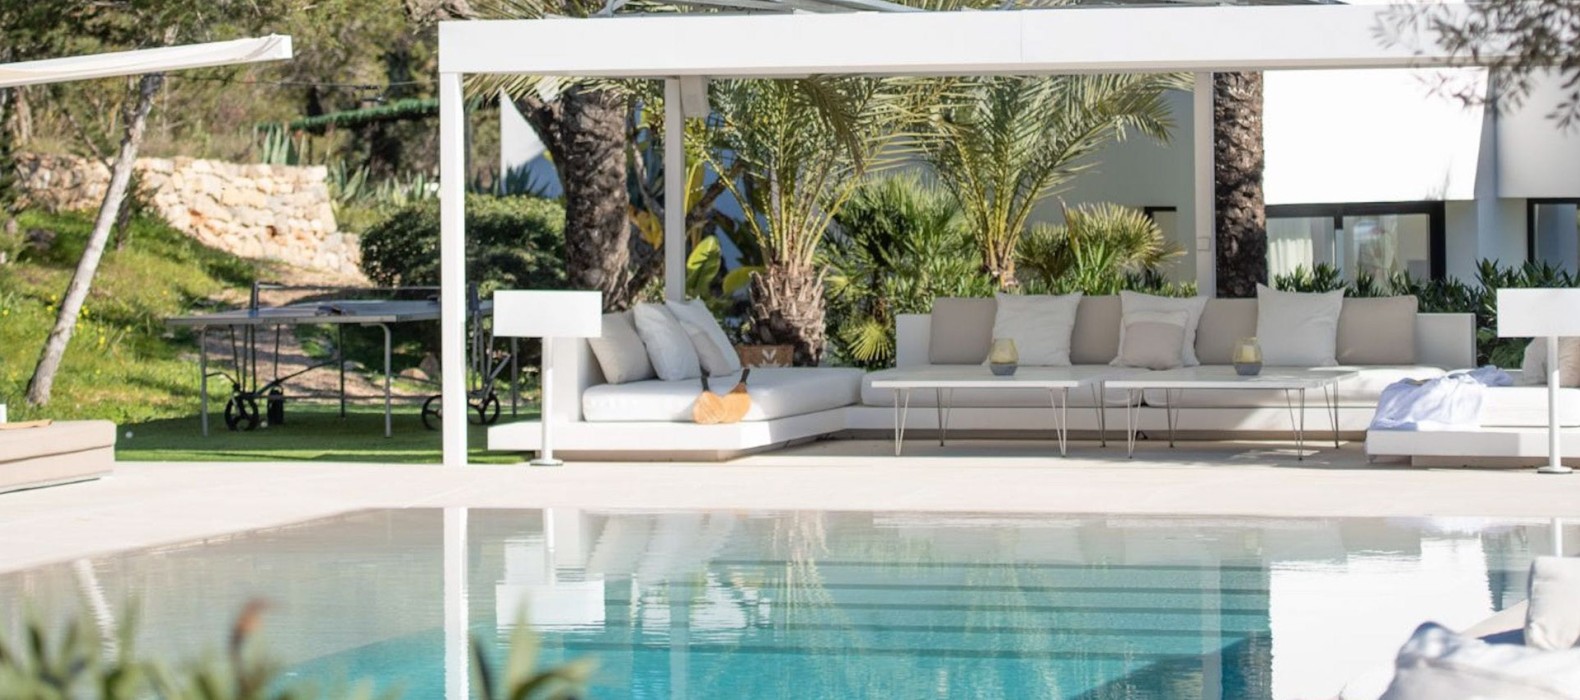 Exterior pool area of Villa Liama in Ibiza